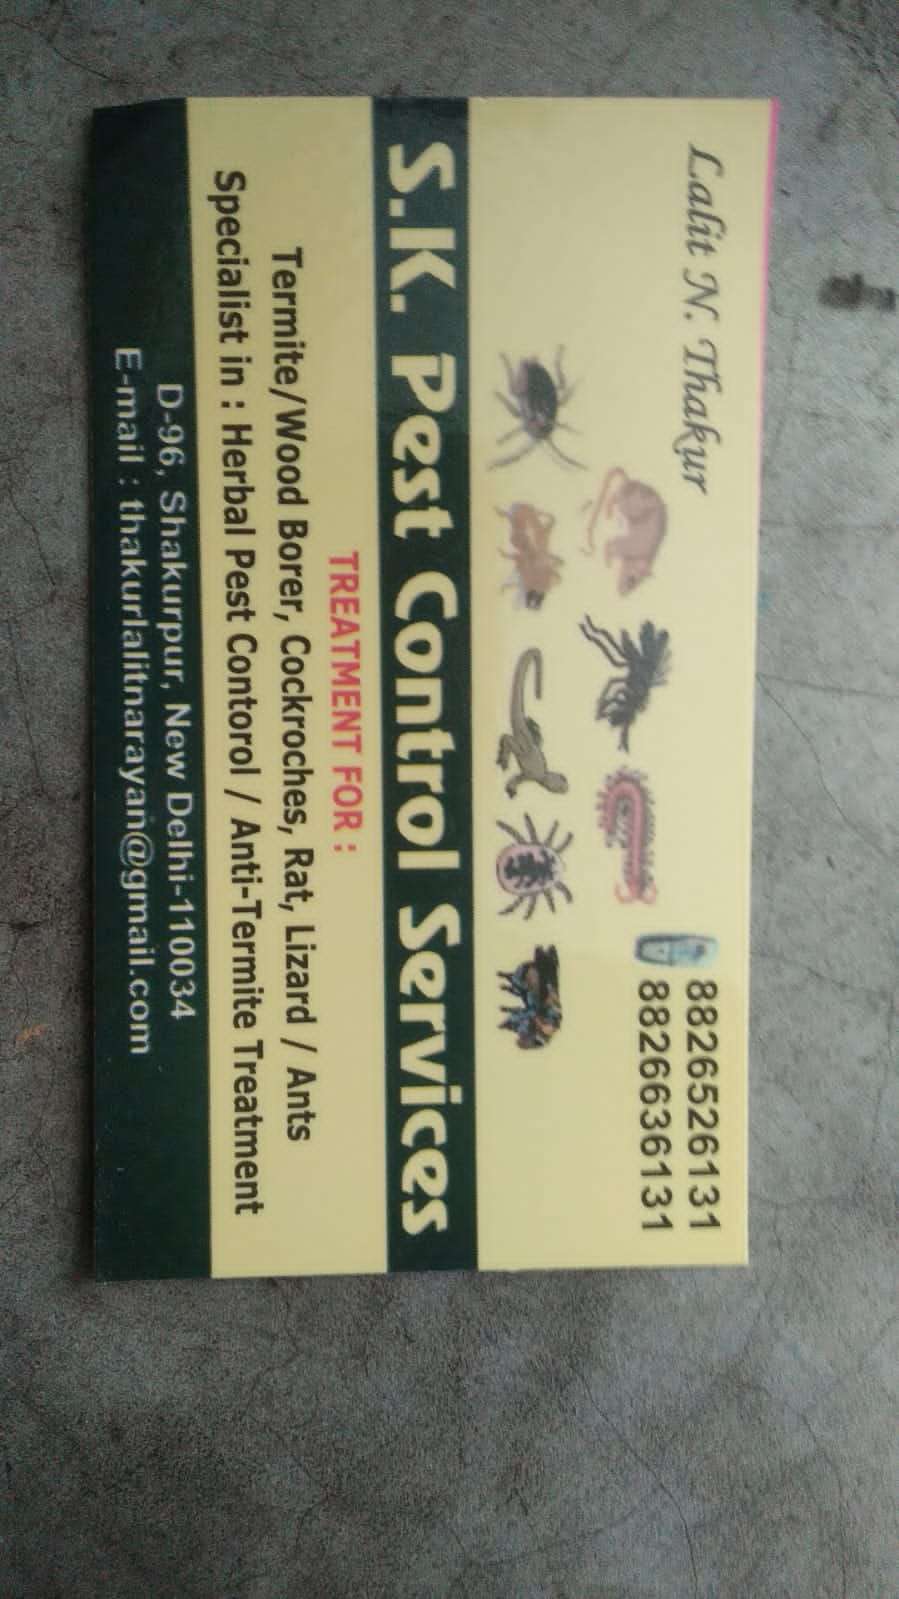 Very nice pestcontrol service 